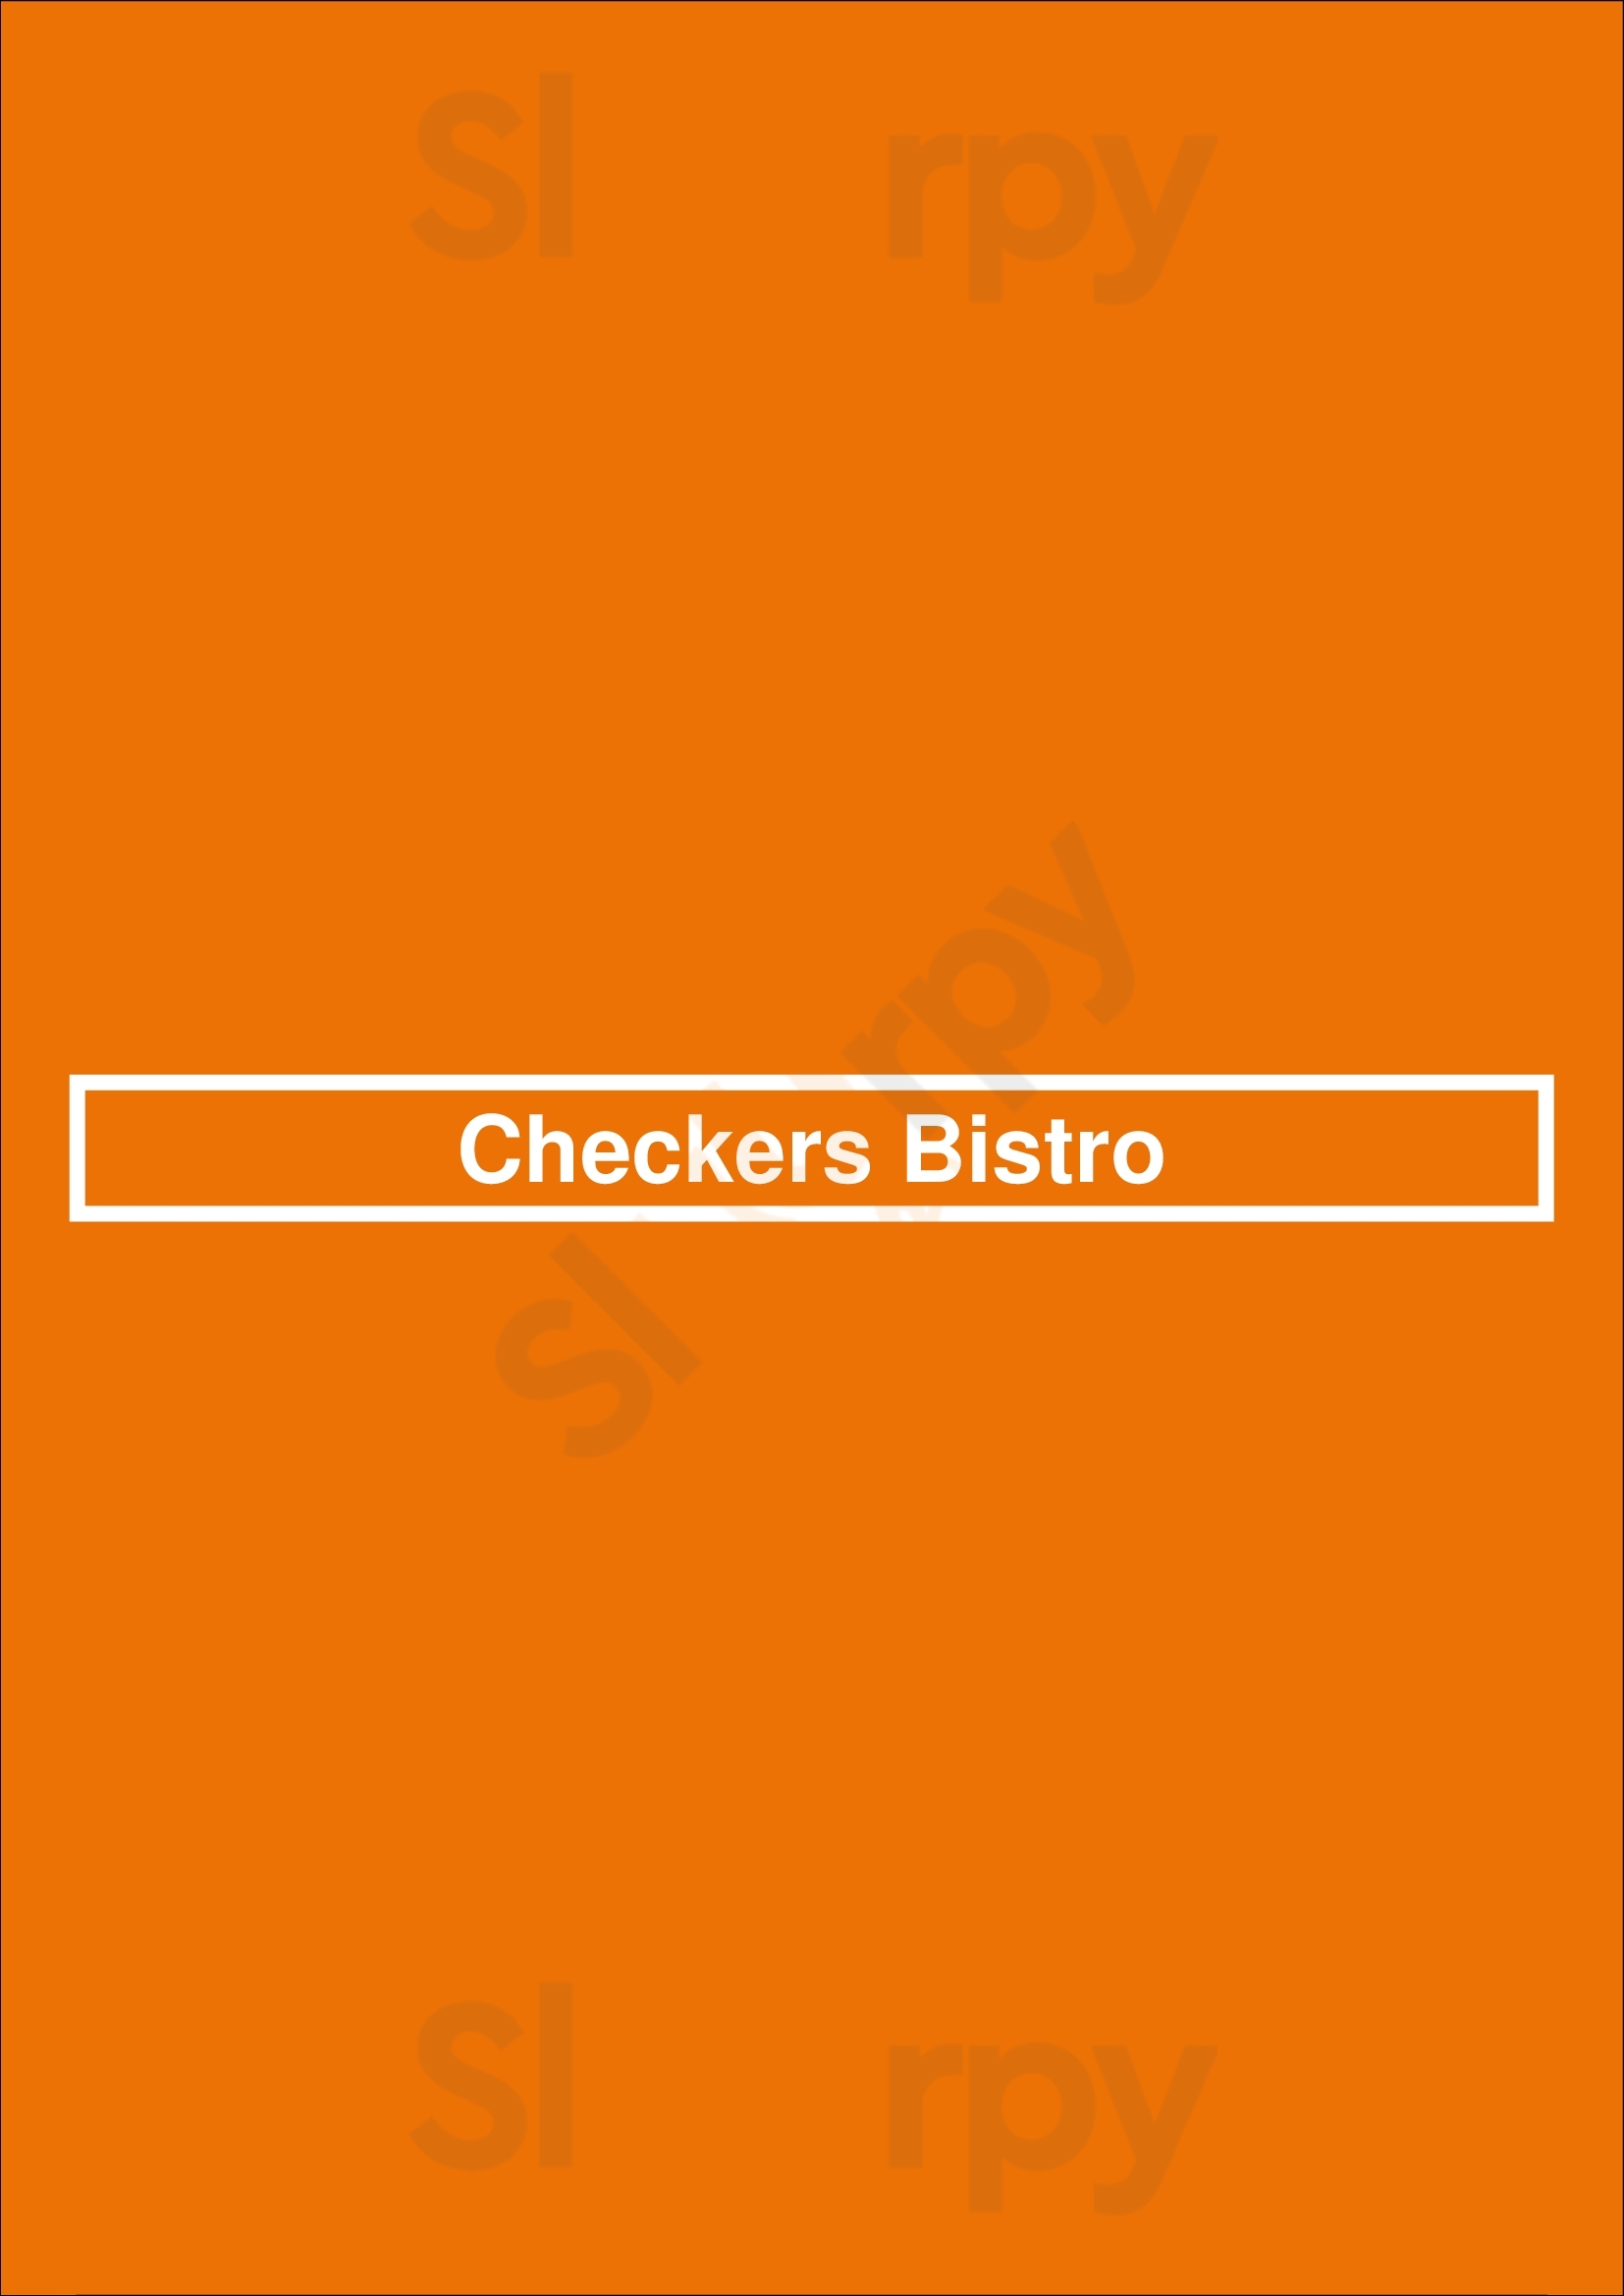 Checkers Bistro Lancaster Menu - 1